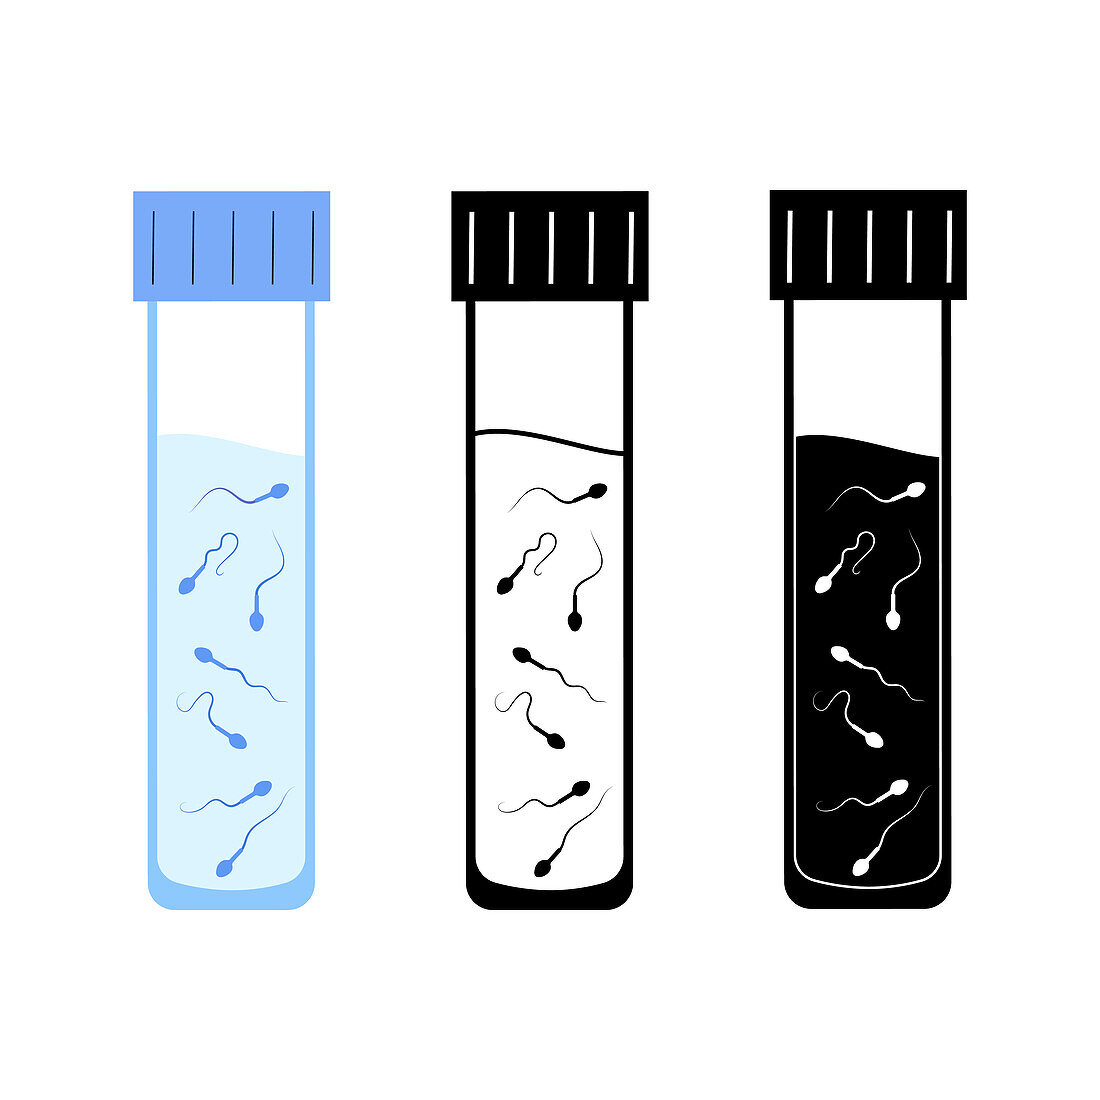 Sperm samples, illustration